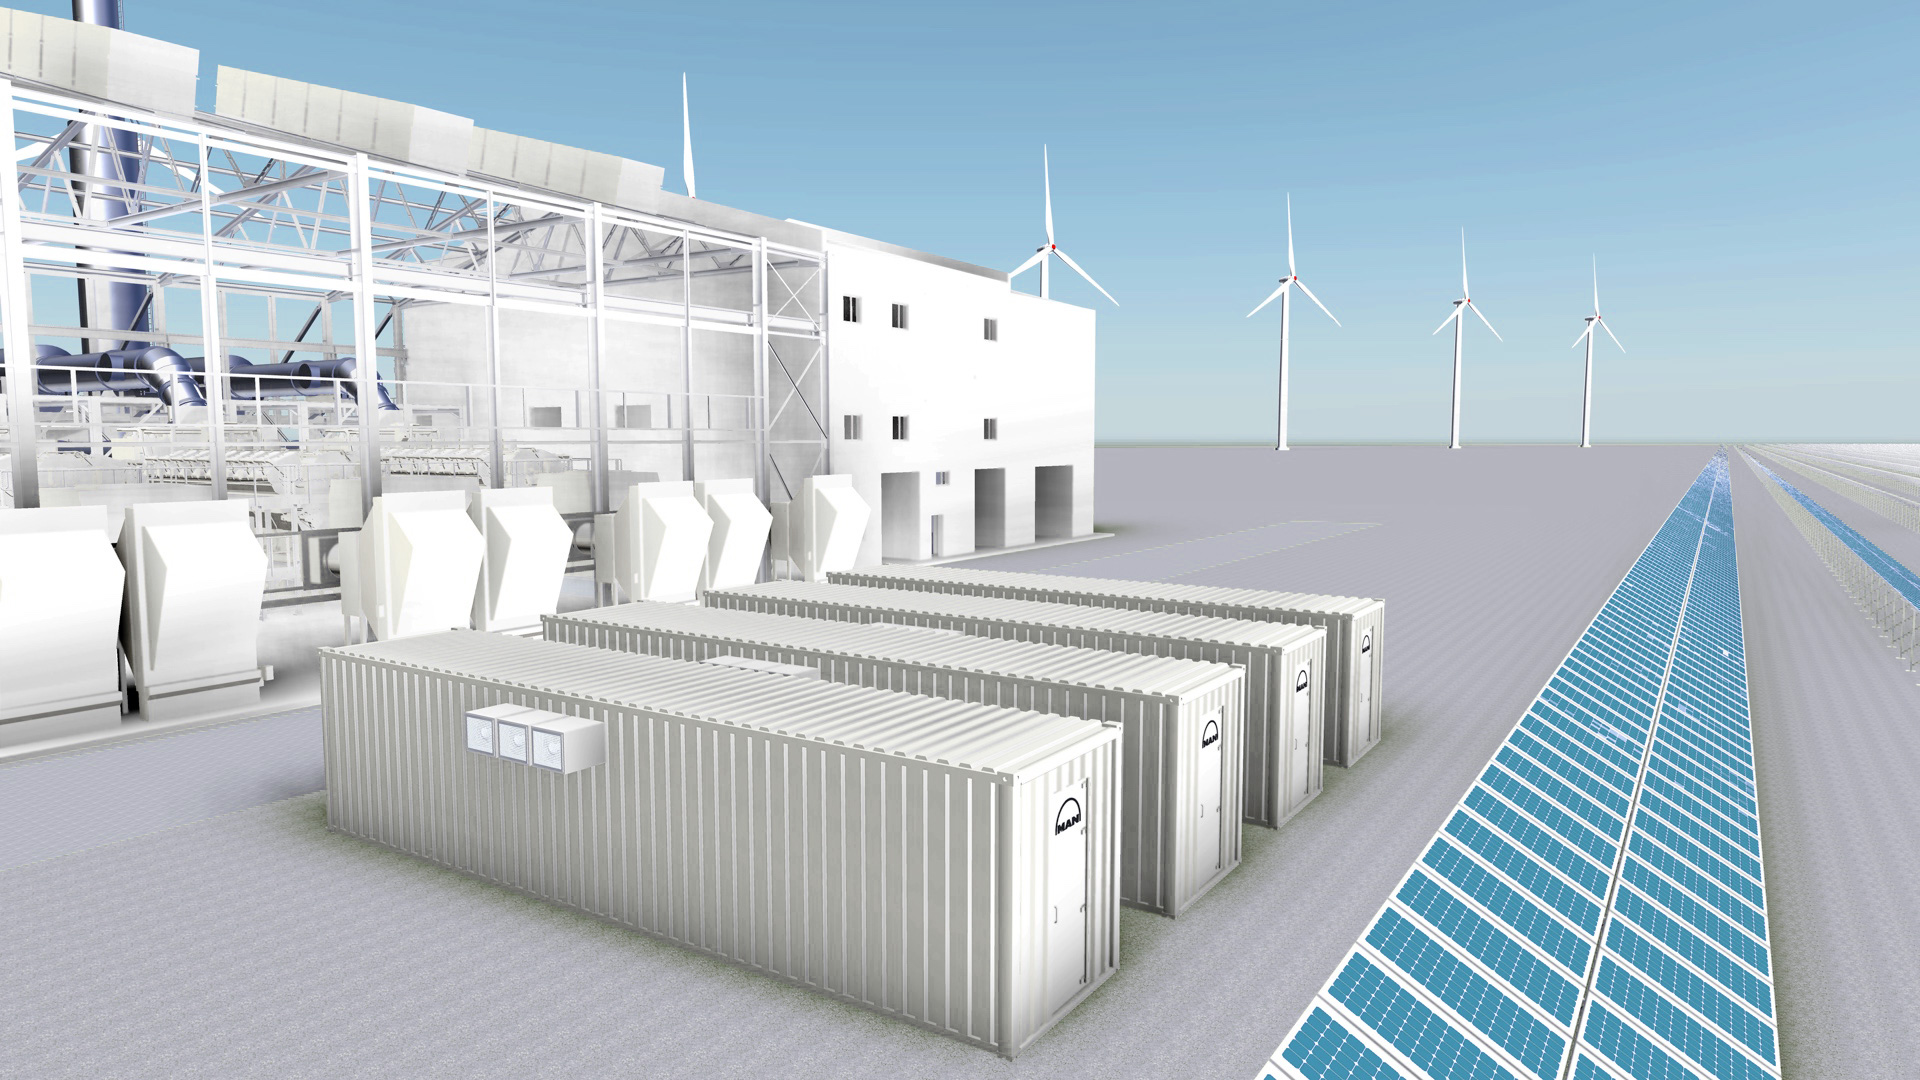 Hybrid power plant paper cut visual